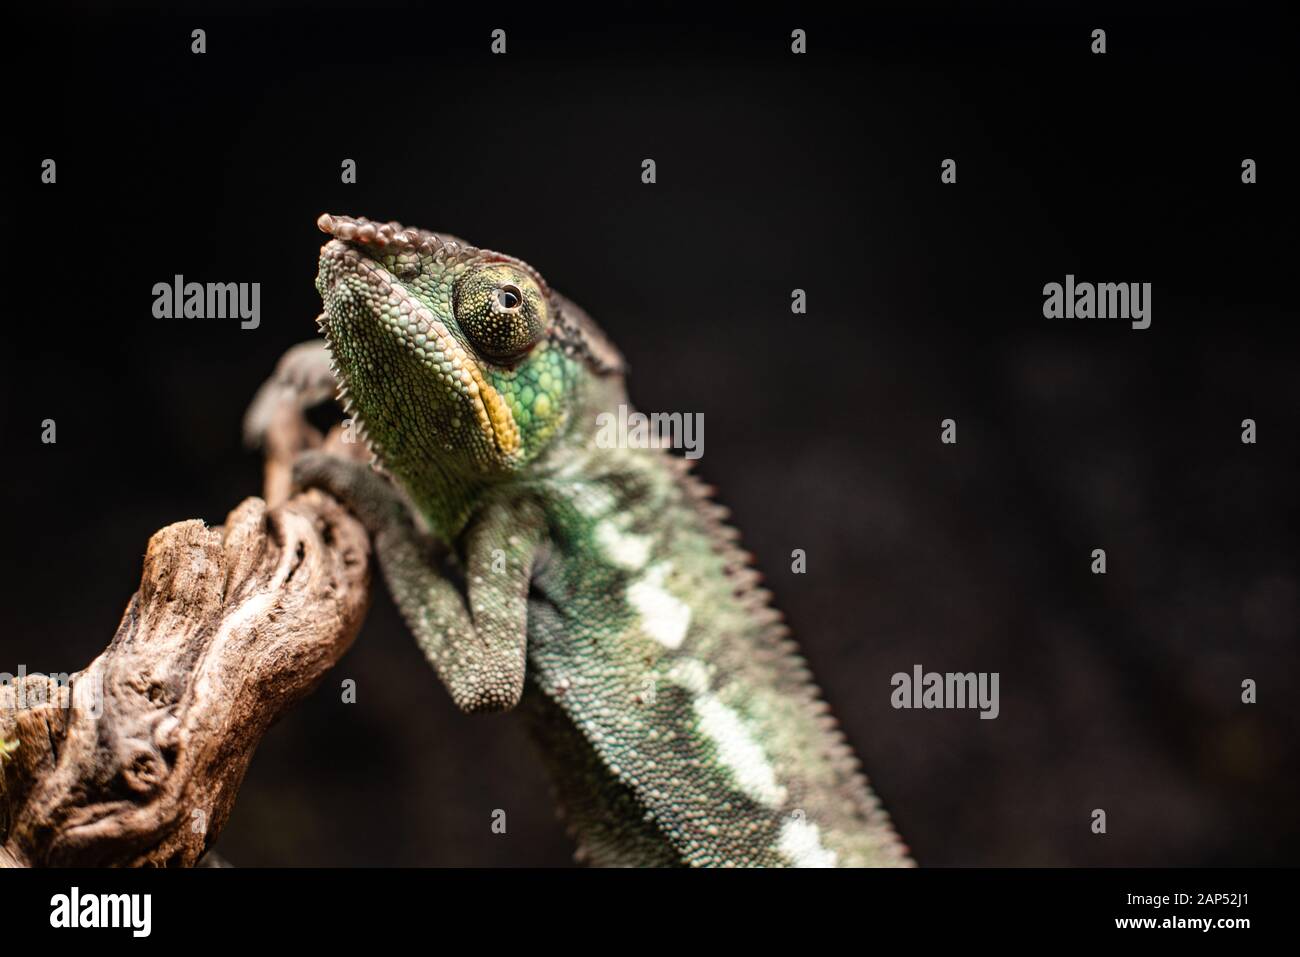 Green chameleon sitting branch rock black background dof sharp focus space for text macro reptile jungle aquarium home pet cute Stock Photo